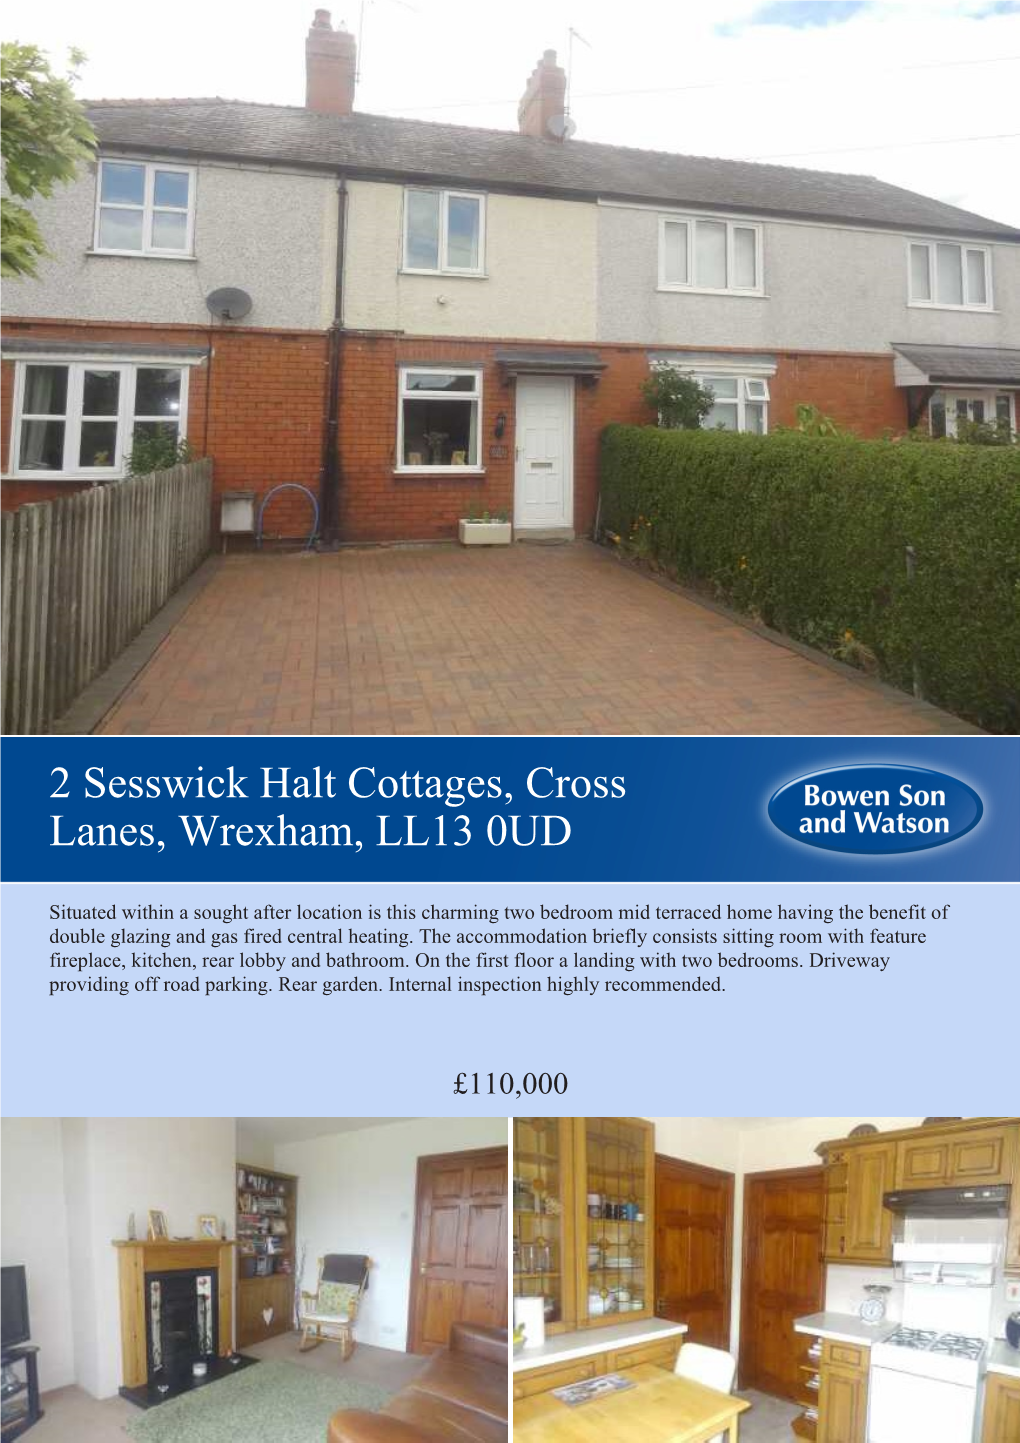 2 Sesswick Halt Cottages, Cross Lanes, Wrexham, LL13 0UD